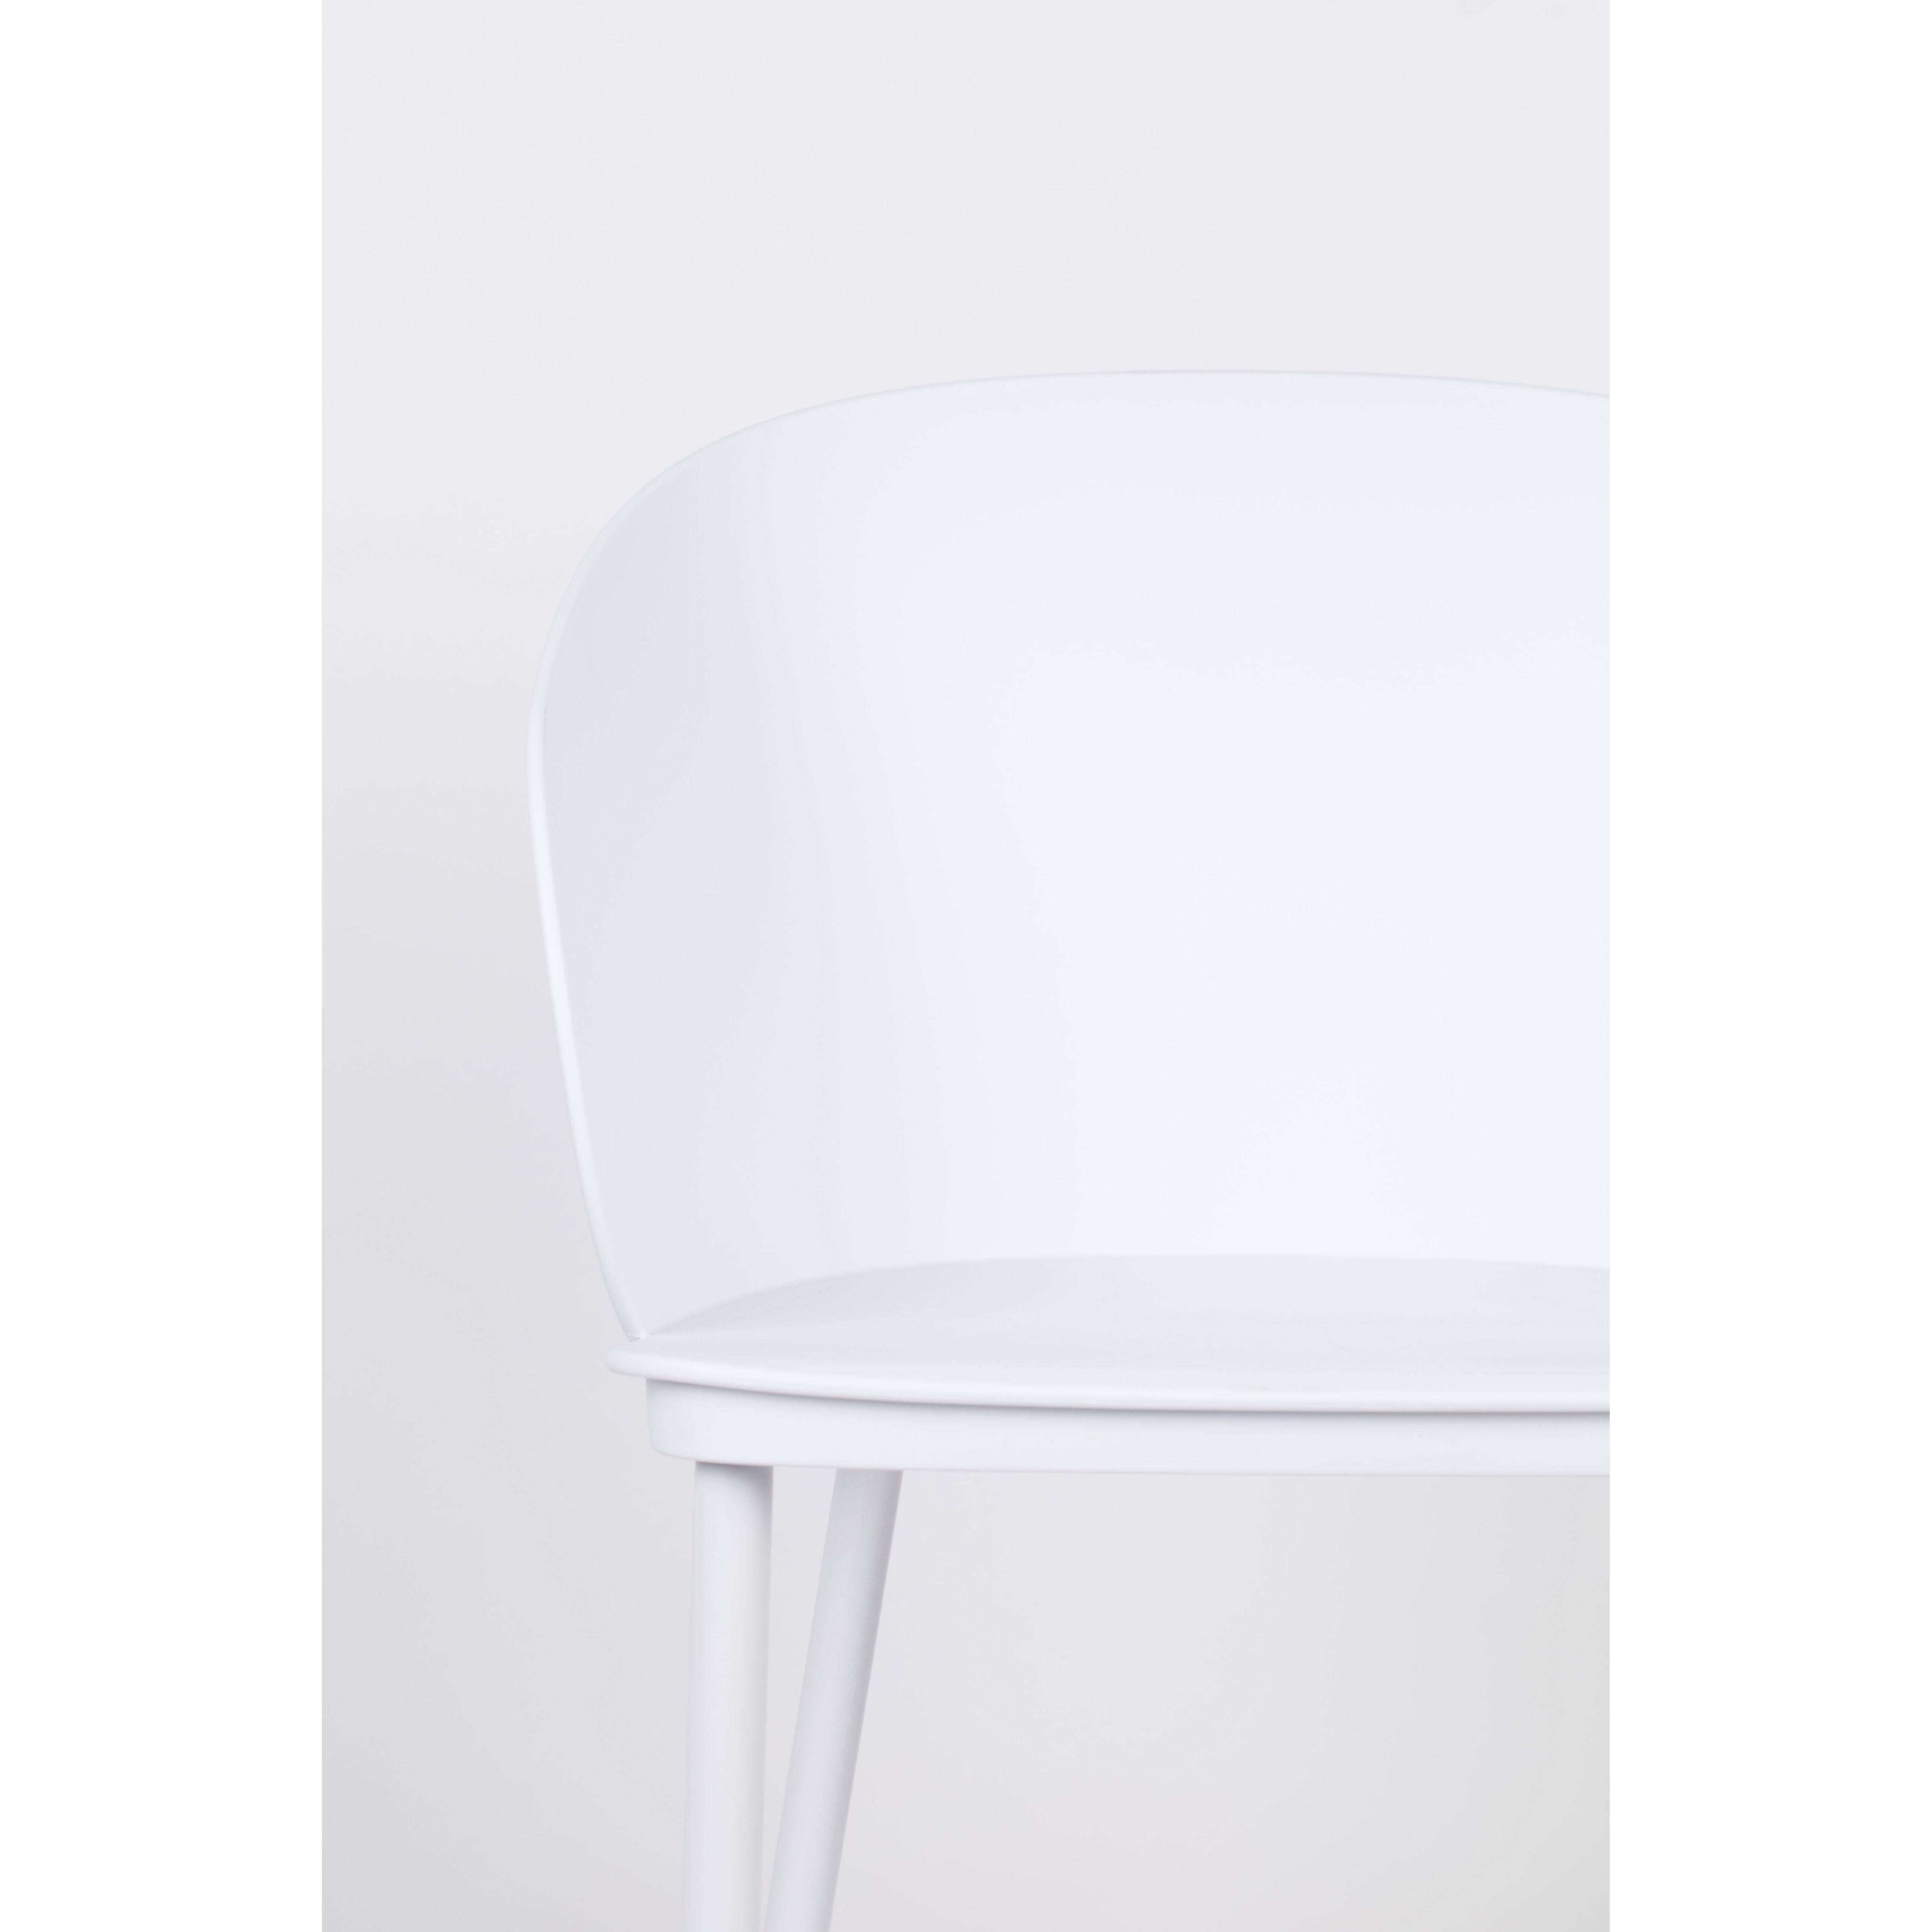 Chair gigi all white | 2 pieces